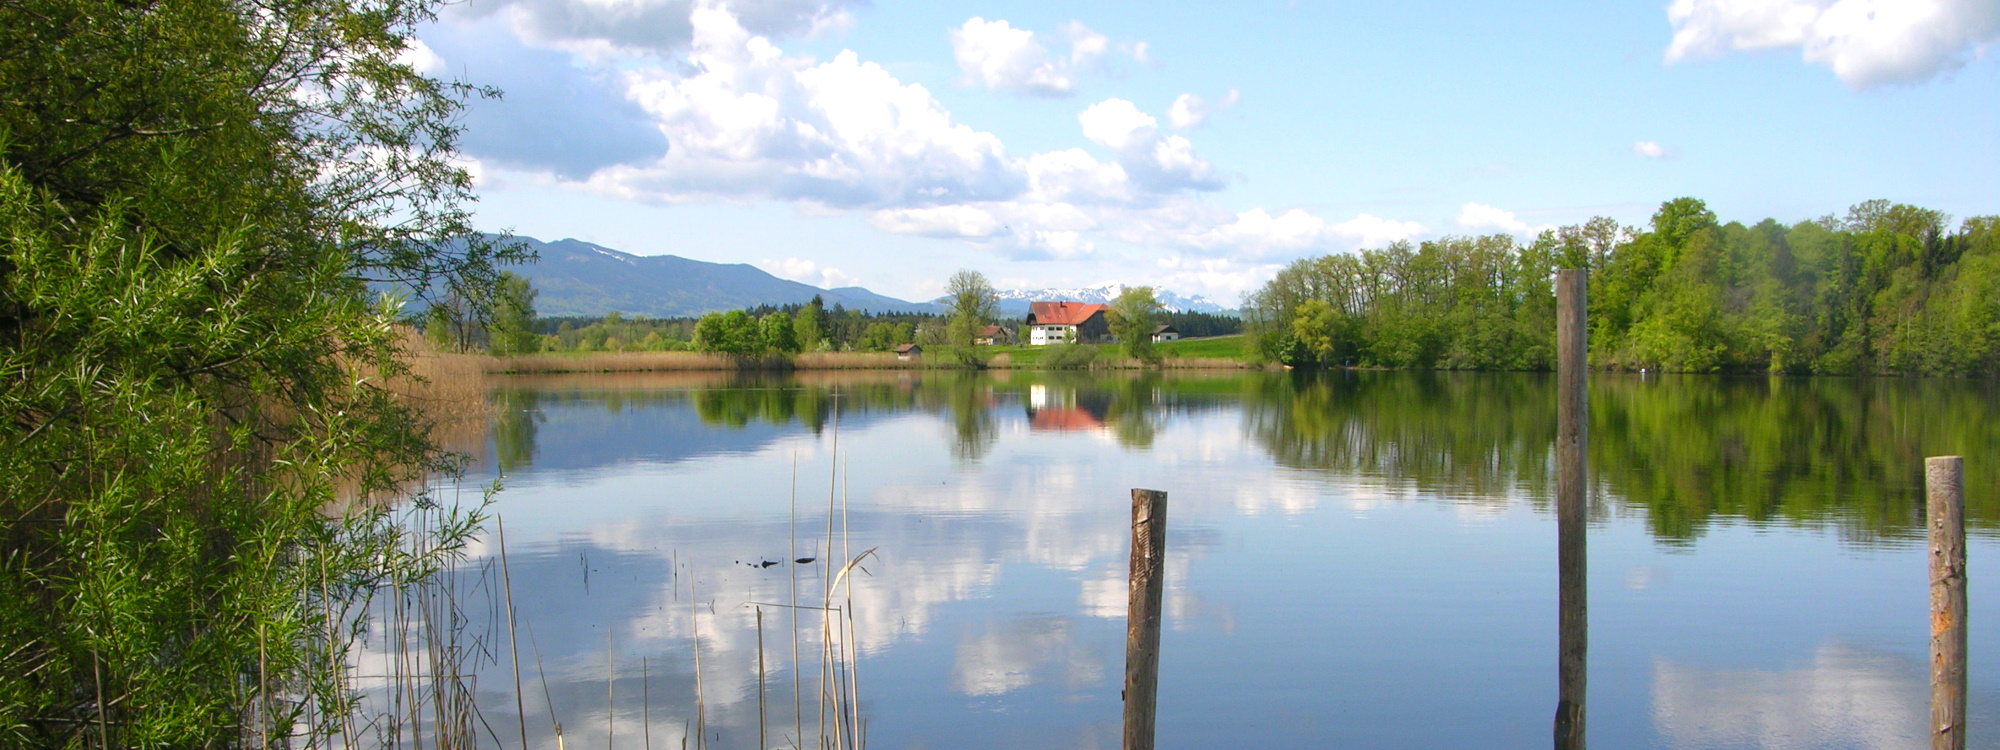 Landschaftsimpression am Abtsdorfer See